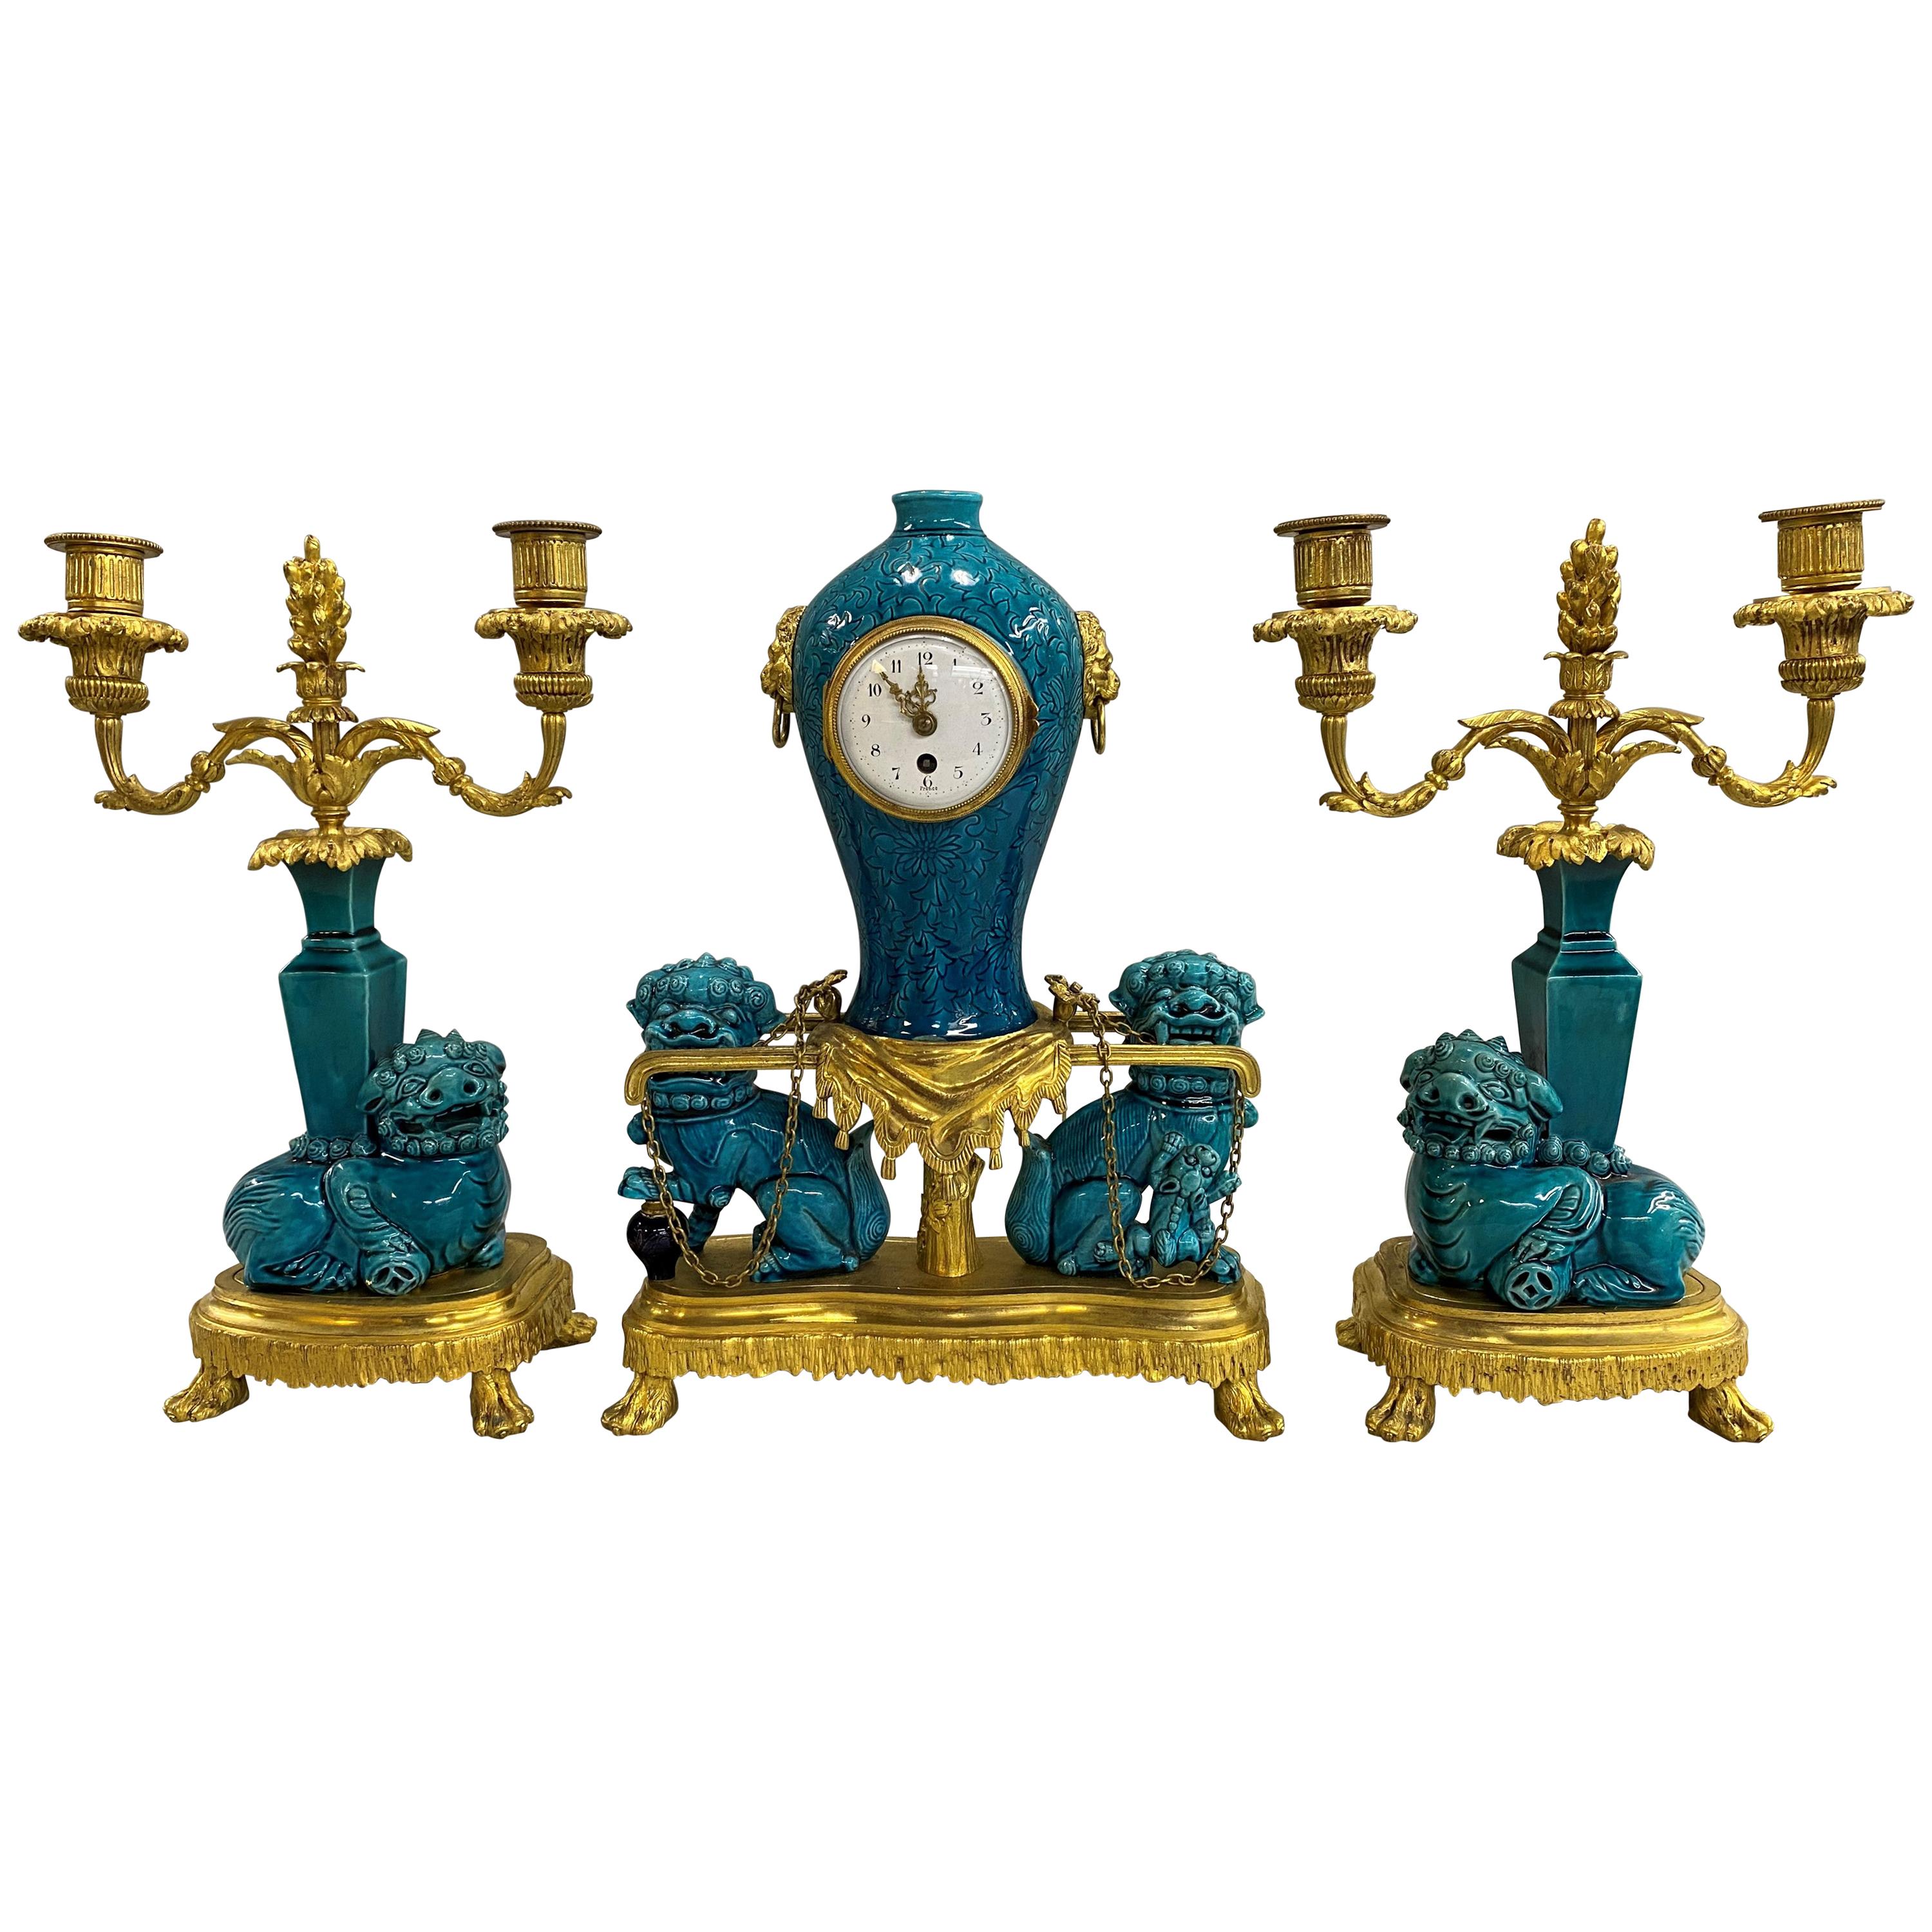 19th Century Ormolu French Three-Piece Clock Set in the Chinese Taste